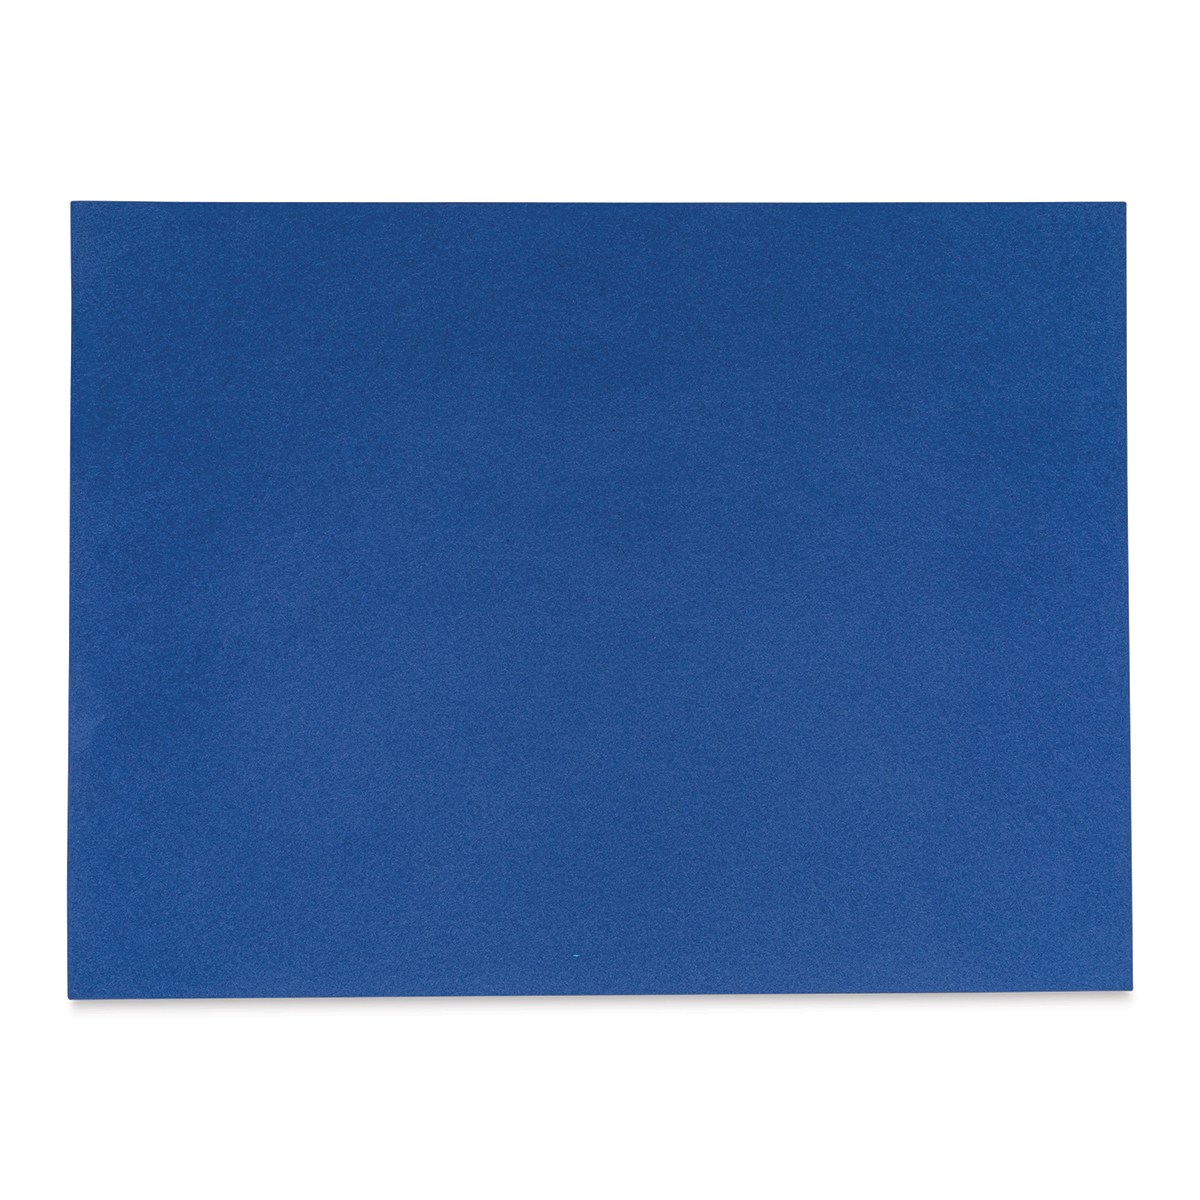 Tru-Ray Construction Paper, Royal Blue, 18 x 24, 50 Sheets